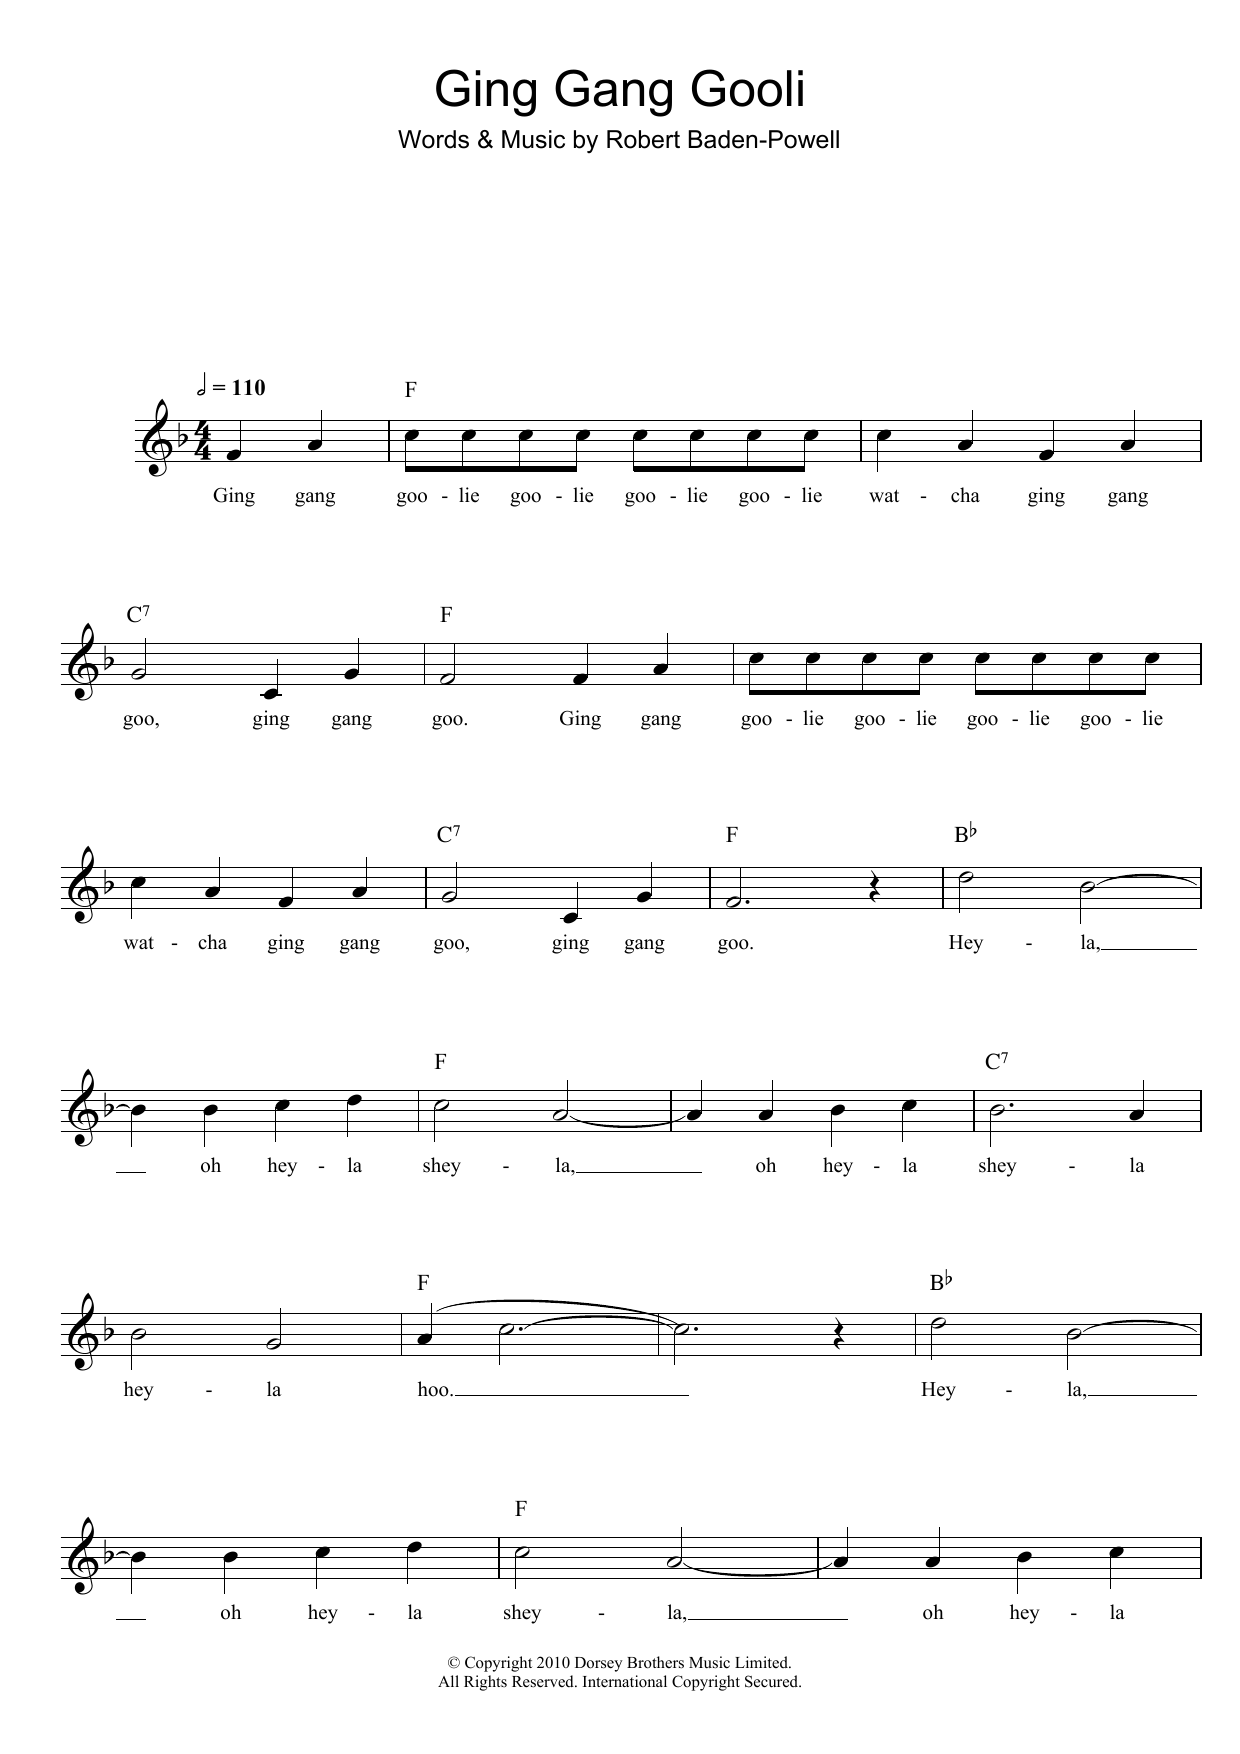 Robert Baden-Powell Ging Gang Gooli Sheet Music Notes & Chords for Melody Line, Lyrics & Chords - Download or Print PDF